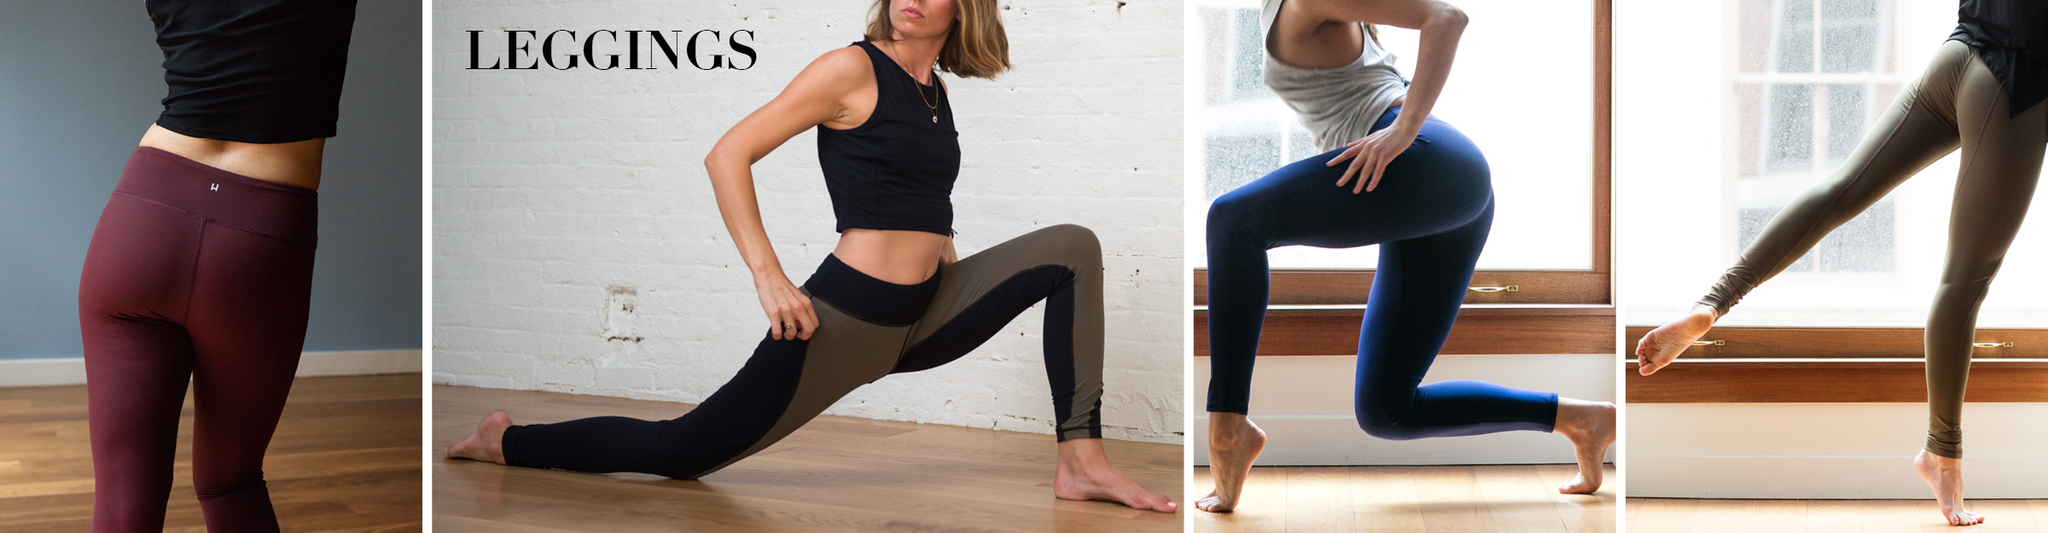 White Contour Leggings  Full-Length Opaque Yoga Leggings– Haven Collective